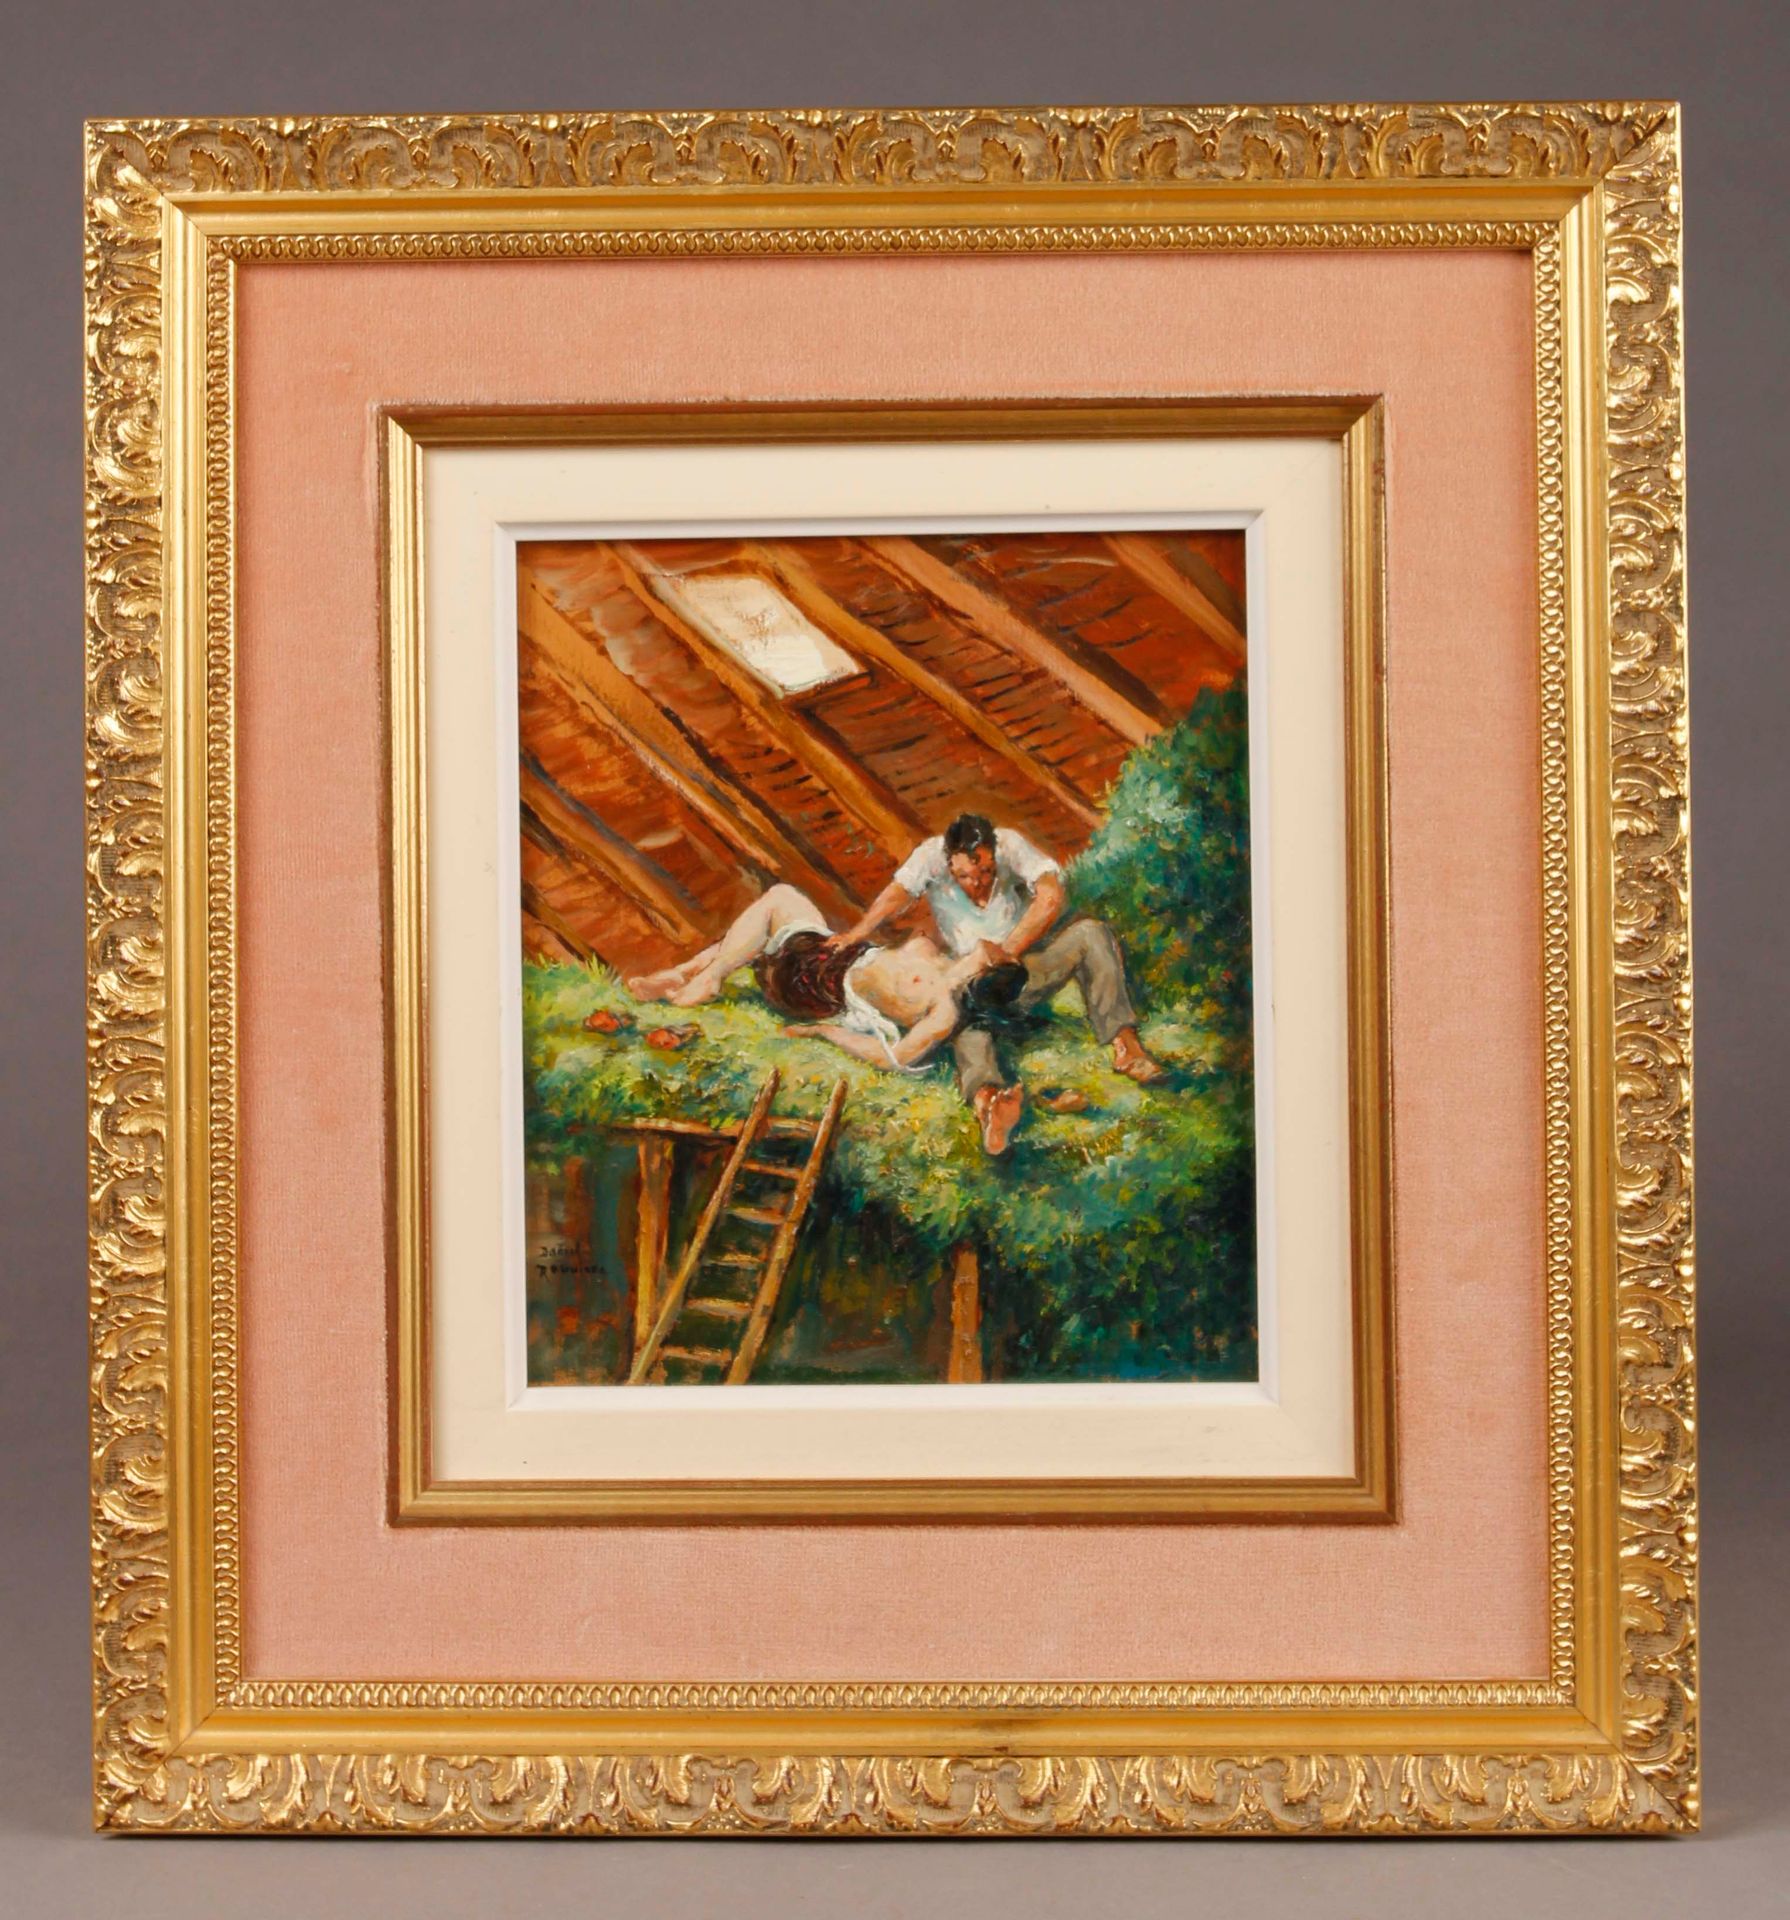 Null 丹尼尔-鲁维埃 (生于1913年)
谷仓里的情侣
板面油画，左下角有签名（有框架）。
22 x 19 cm